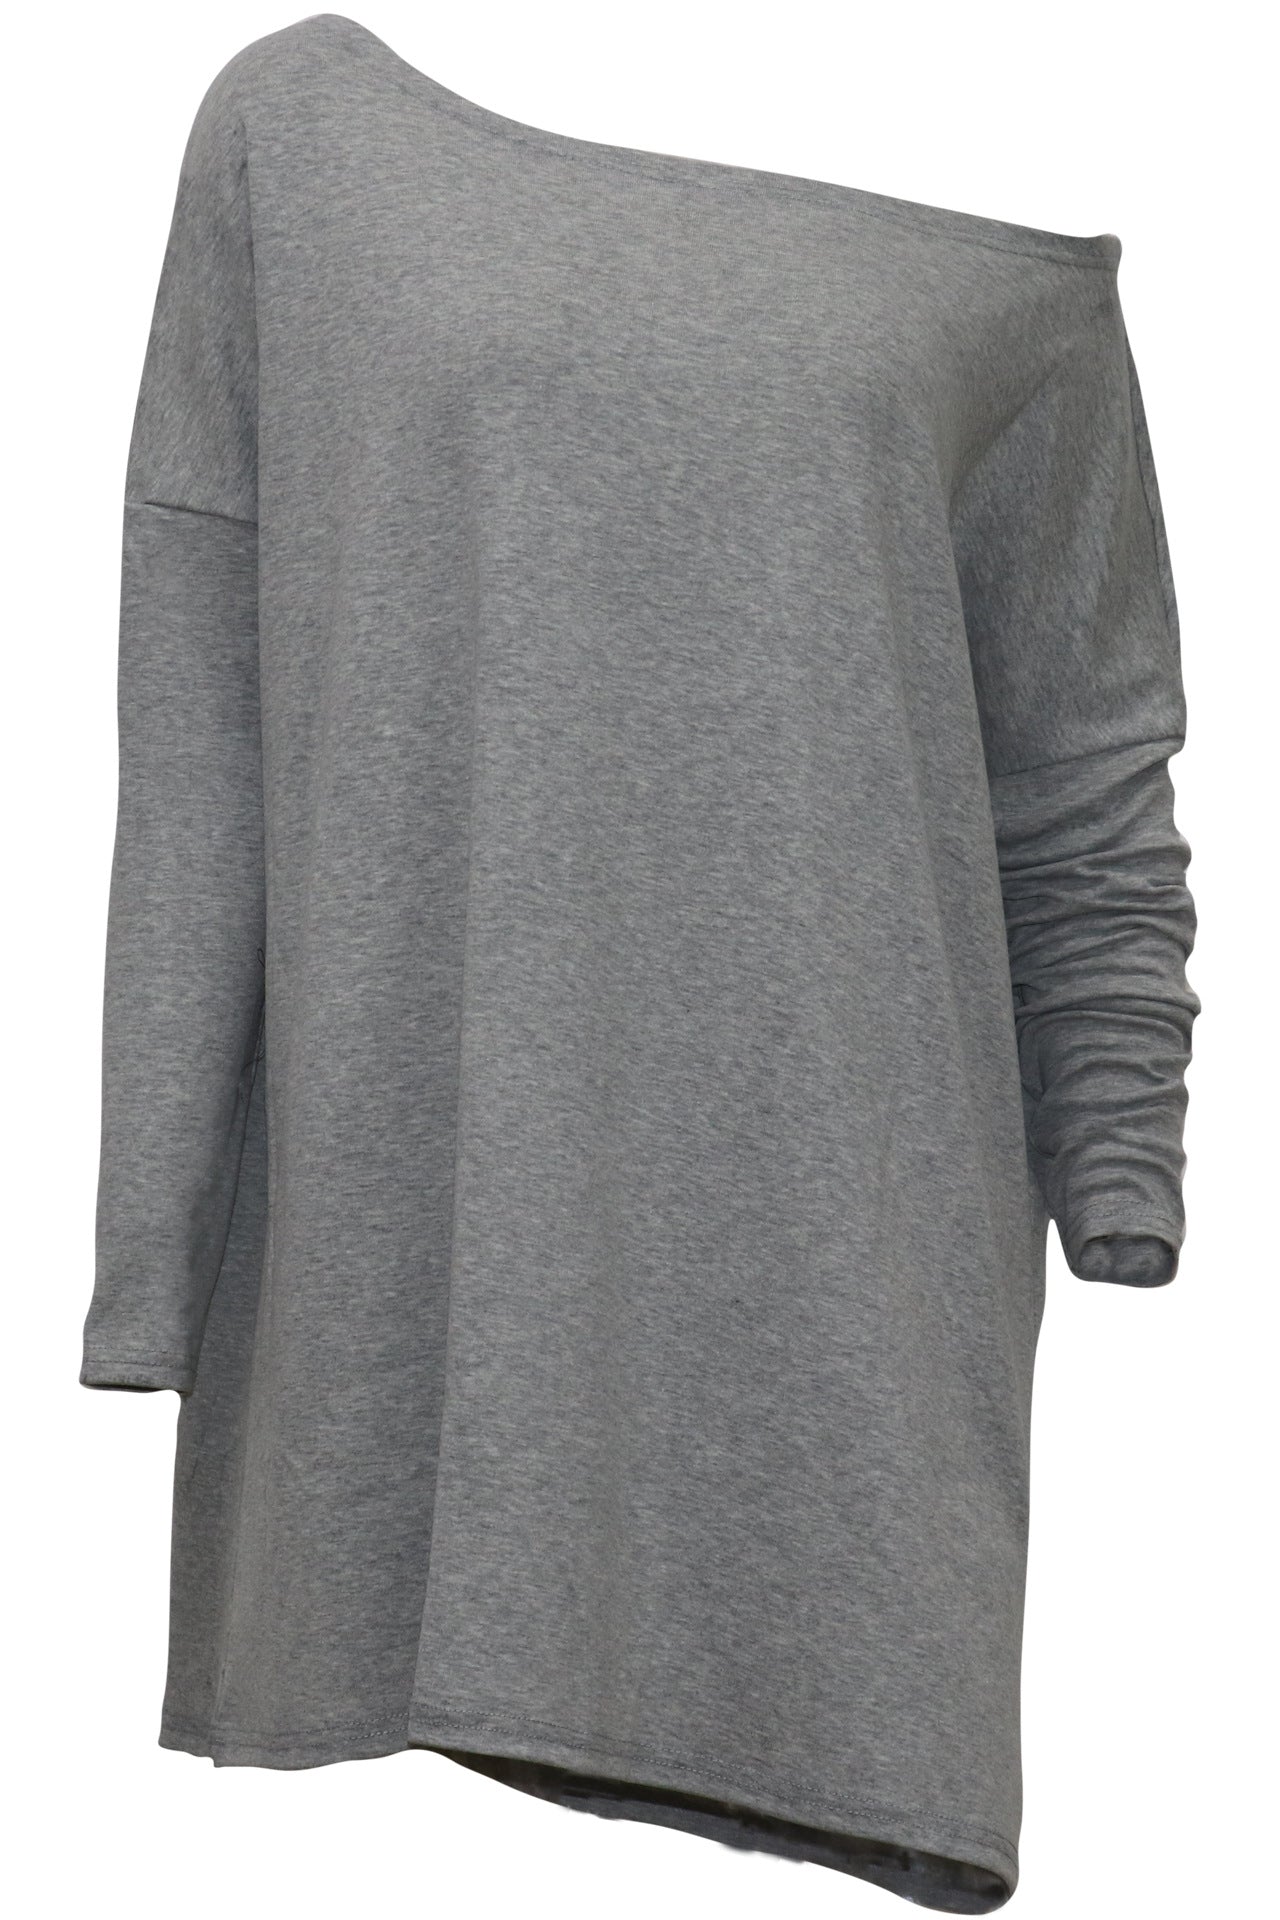 Fashion Off The Shoulder Long Sleeves T Shirts-Gray-S-Free Shipping at meselling99